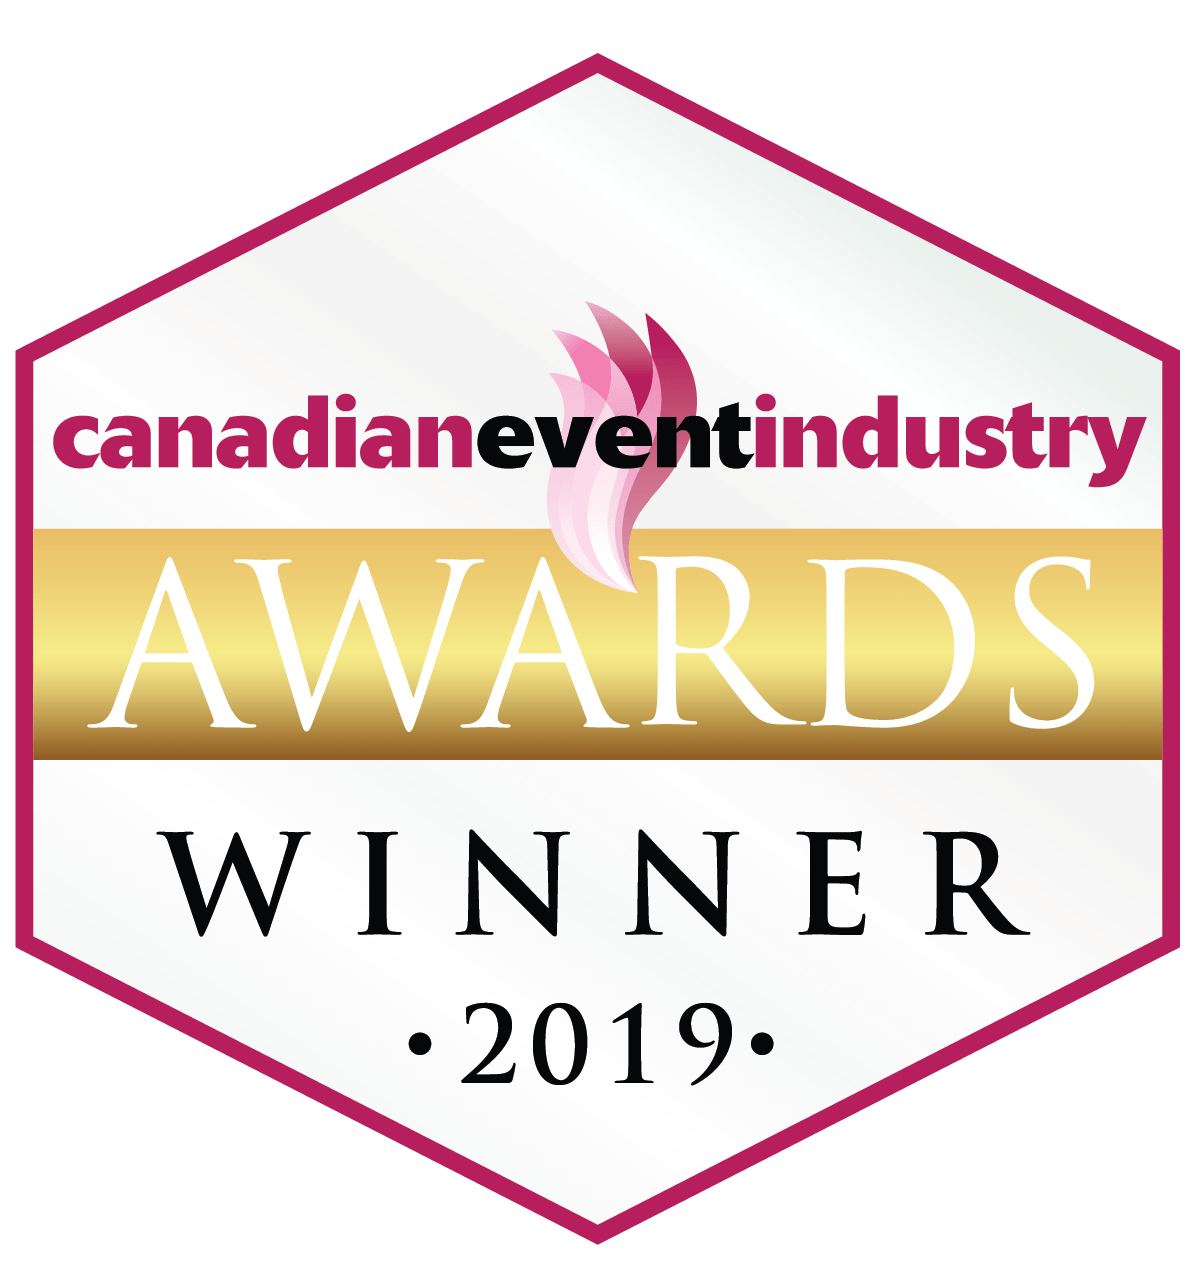 Canadian Event Industry Award winner